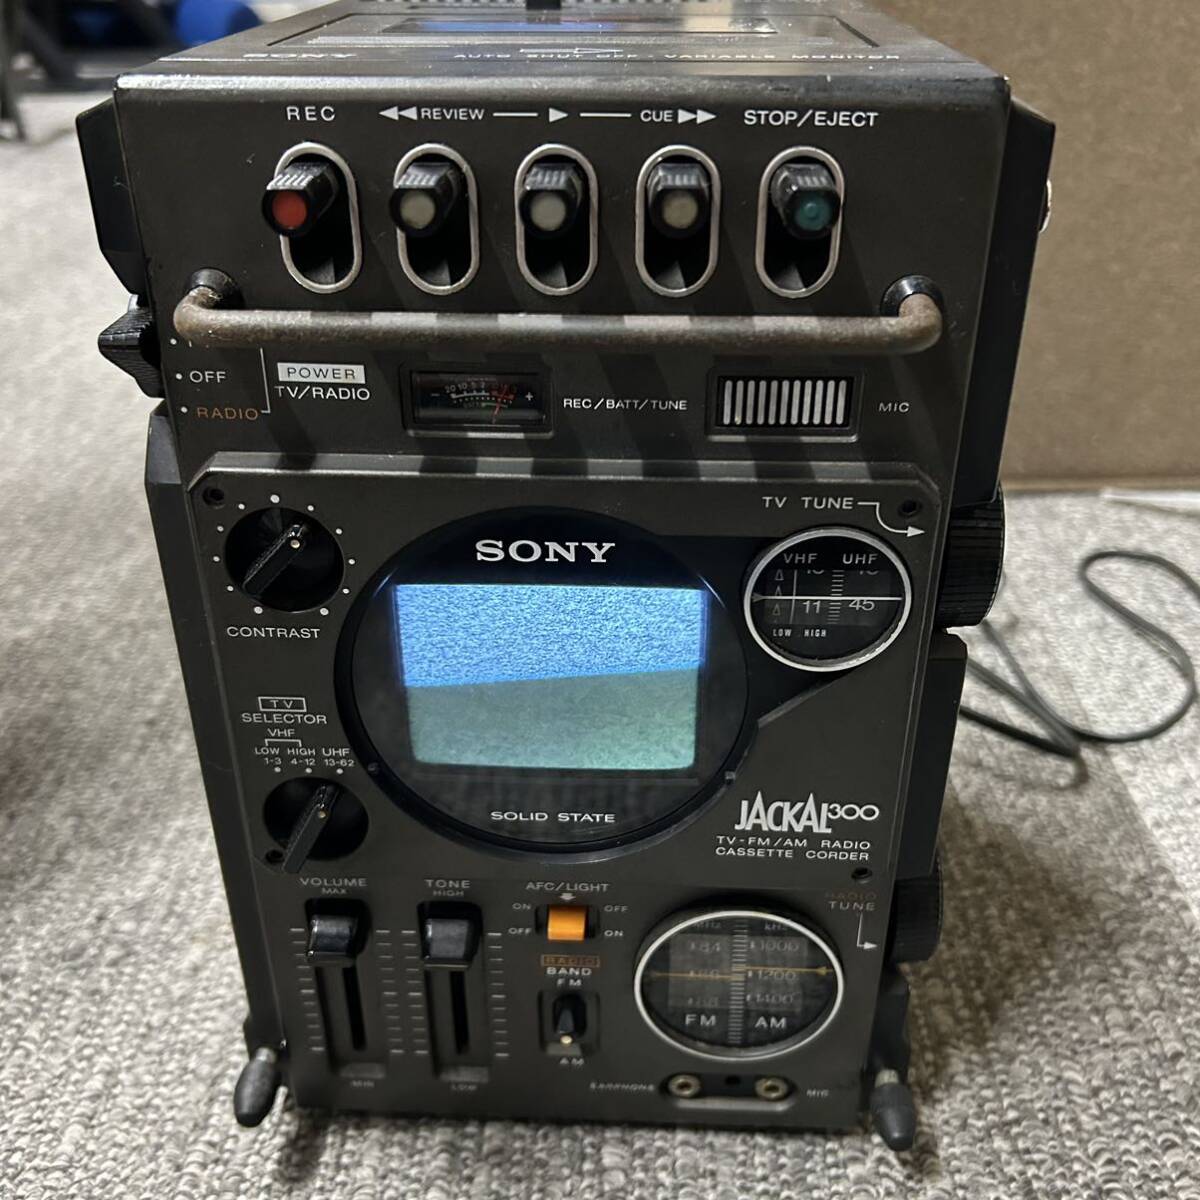 SONY ソニー FX-300 JACKAL300（初代ジャッカル）白黒テレビ付ラジカセ TV-FM/AM RECEIVER CASSET CORDER ジャンク品 長期保管品の画像2